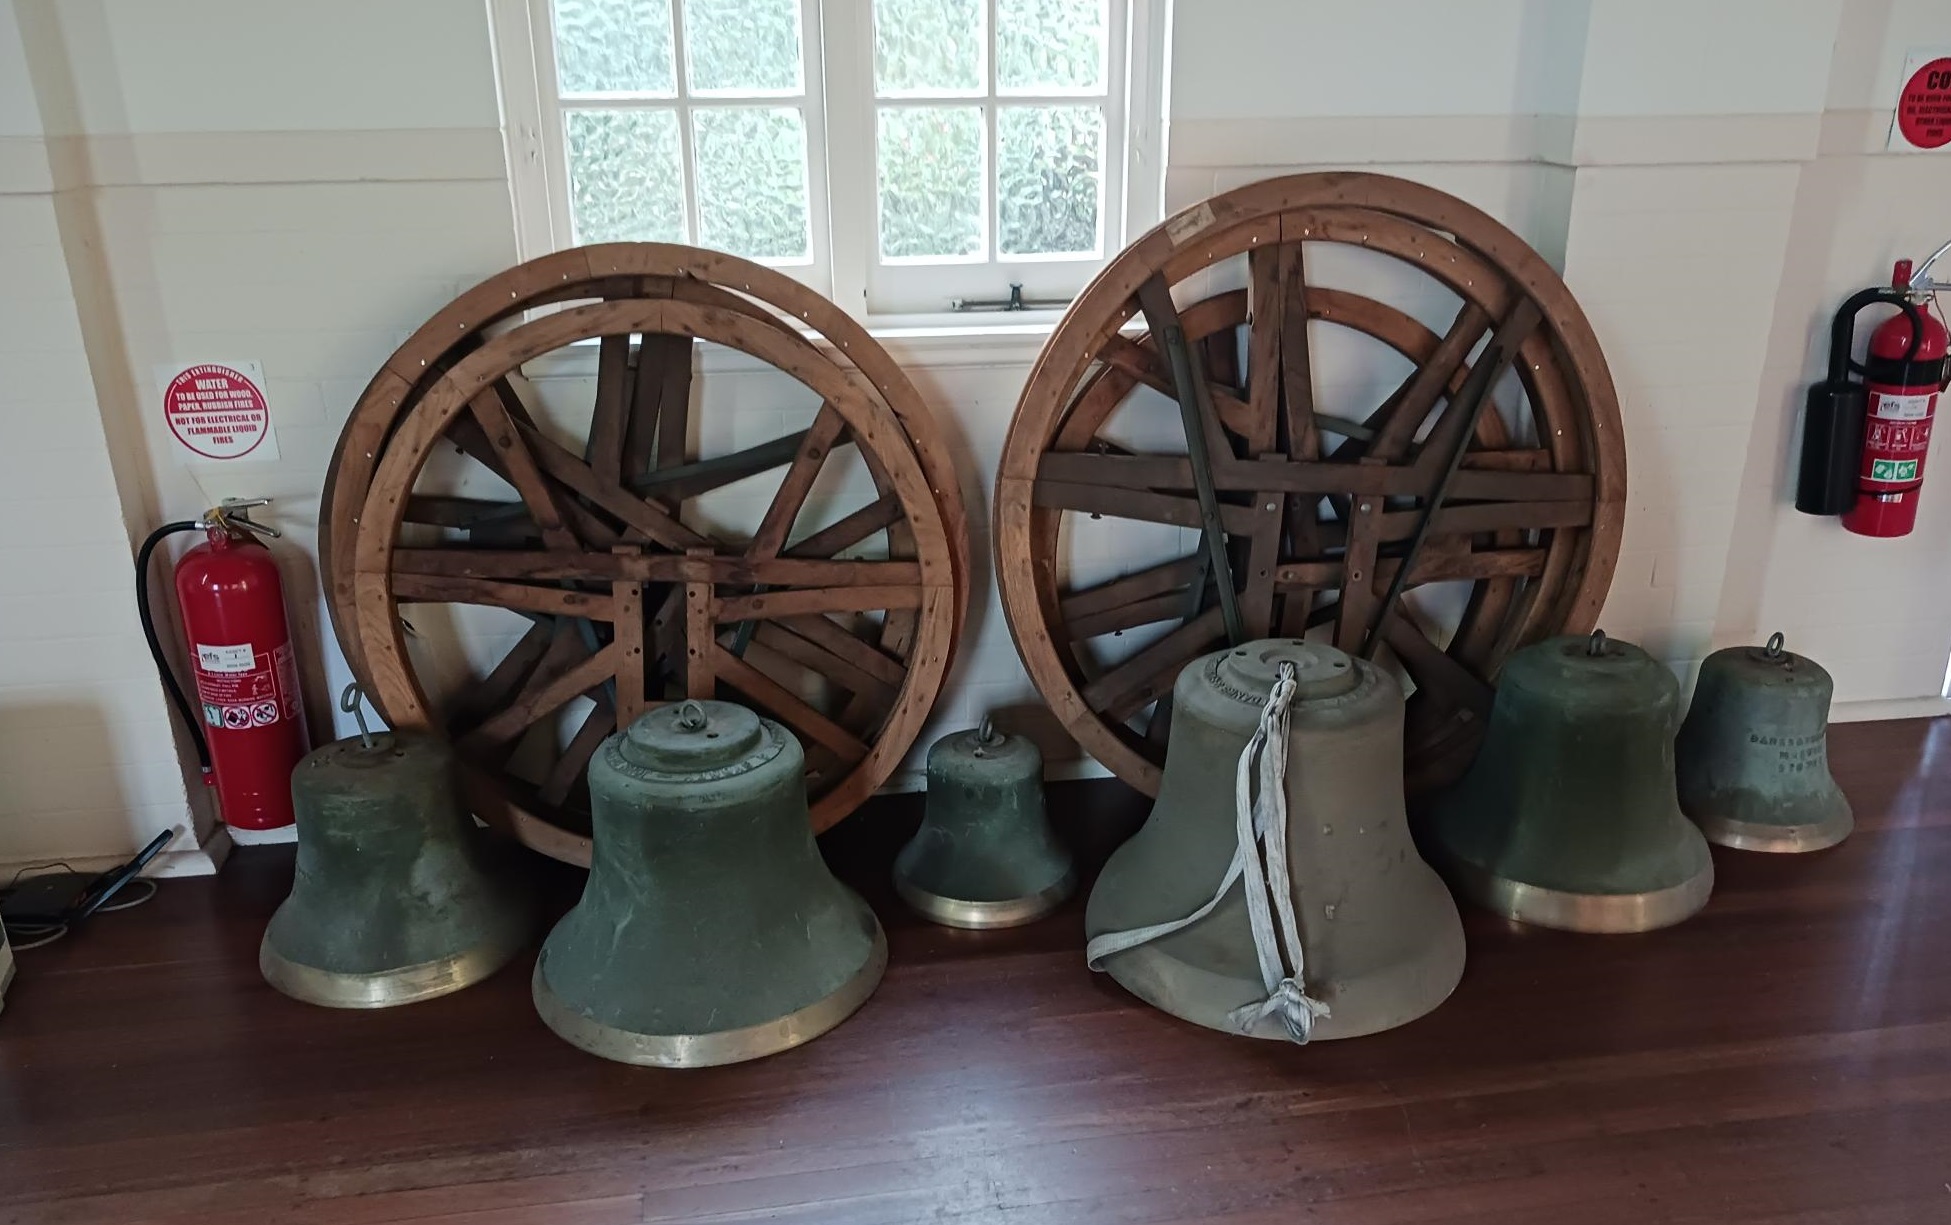 Bells and wheels inside church